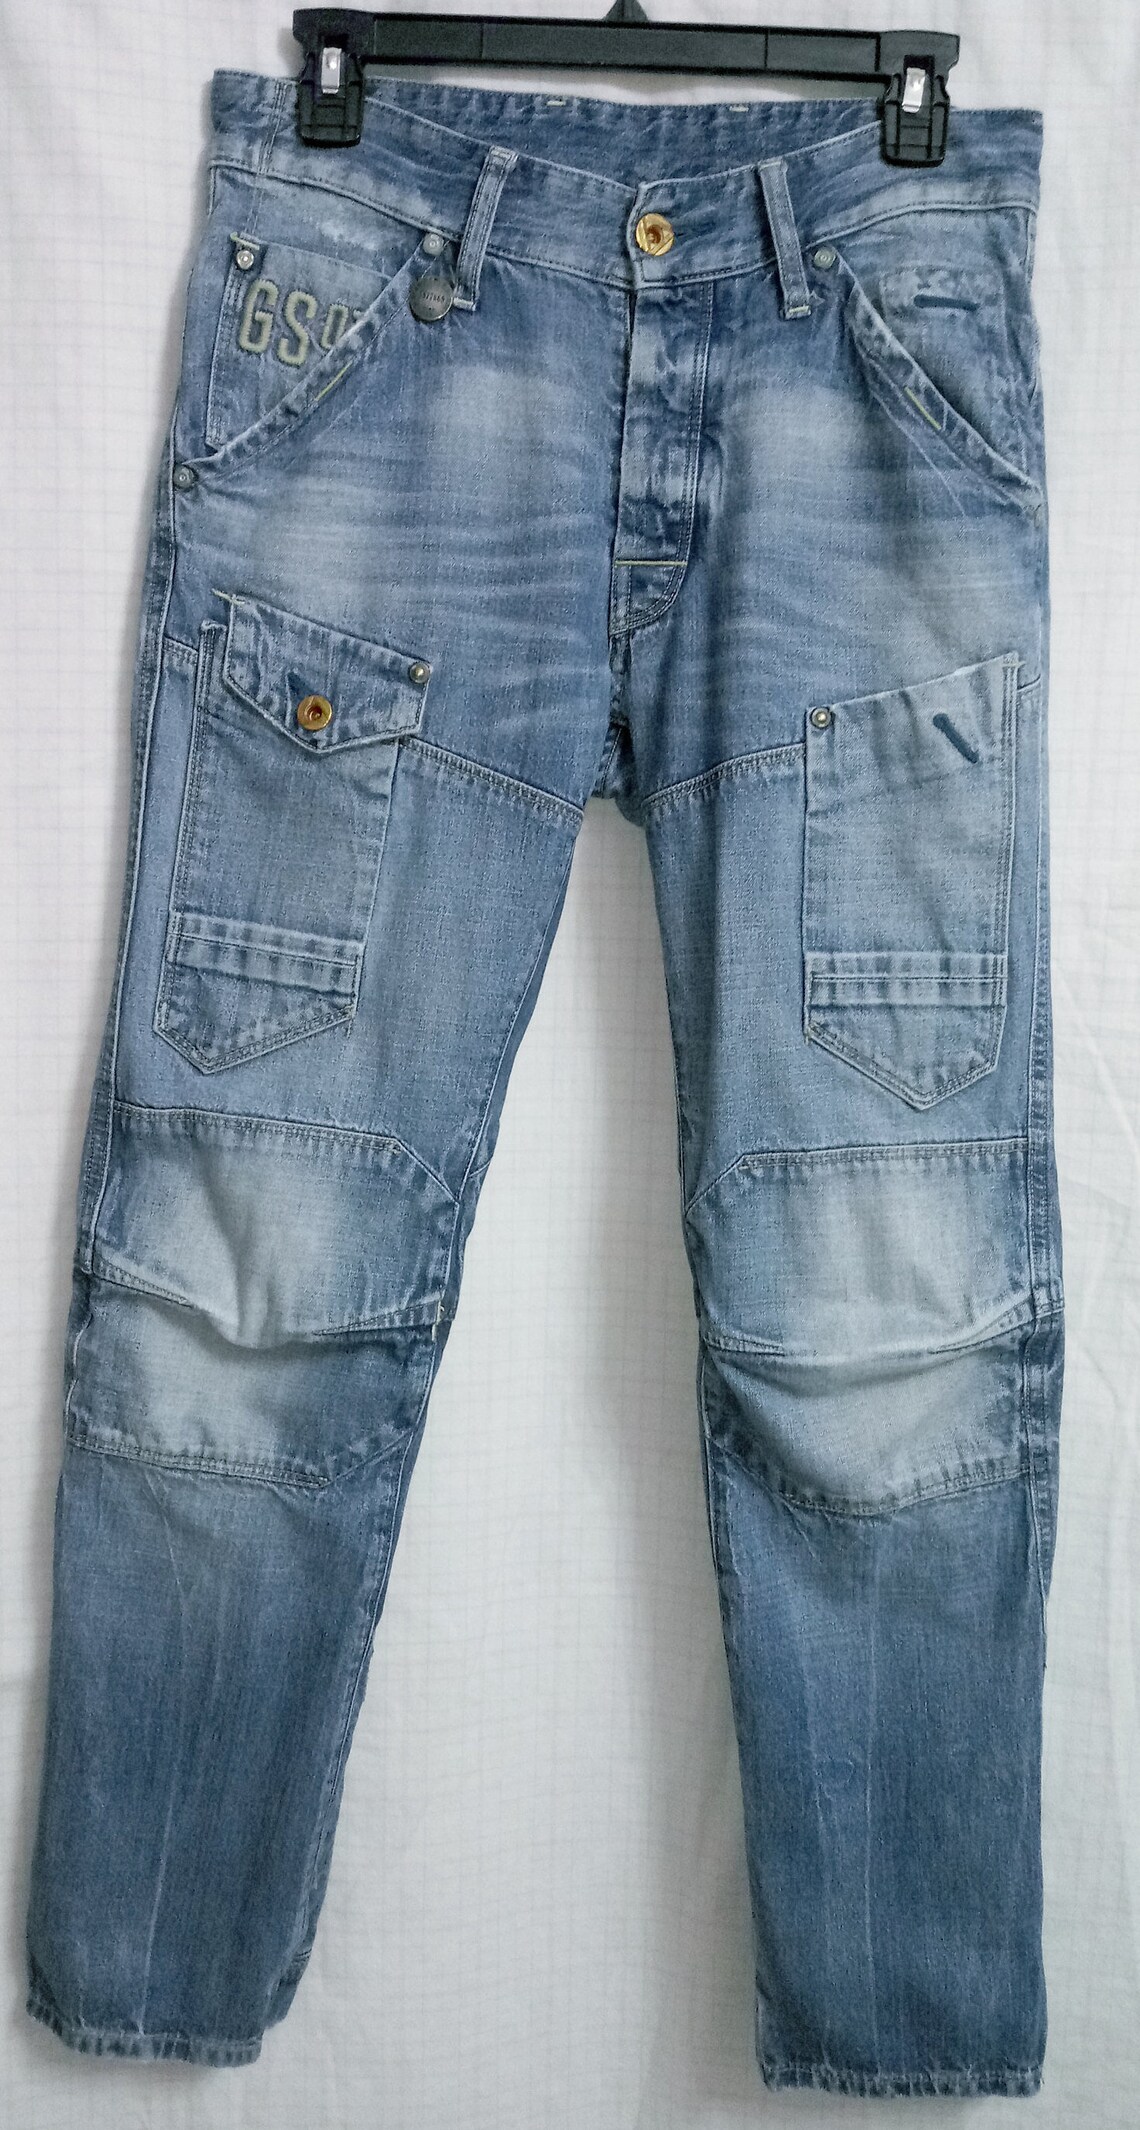 G-STAR 0riginals Raw Vtg Men's Biker Jeans Rare 3301 Button Close 3-D ...